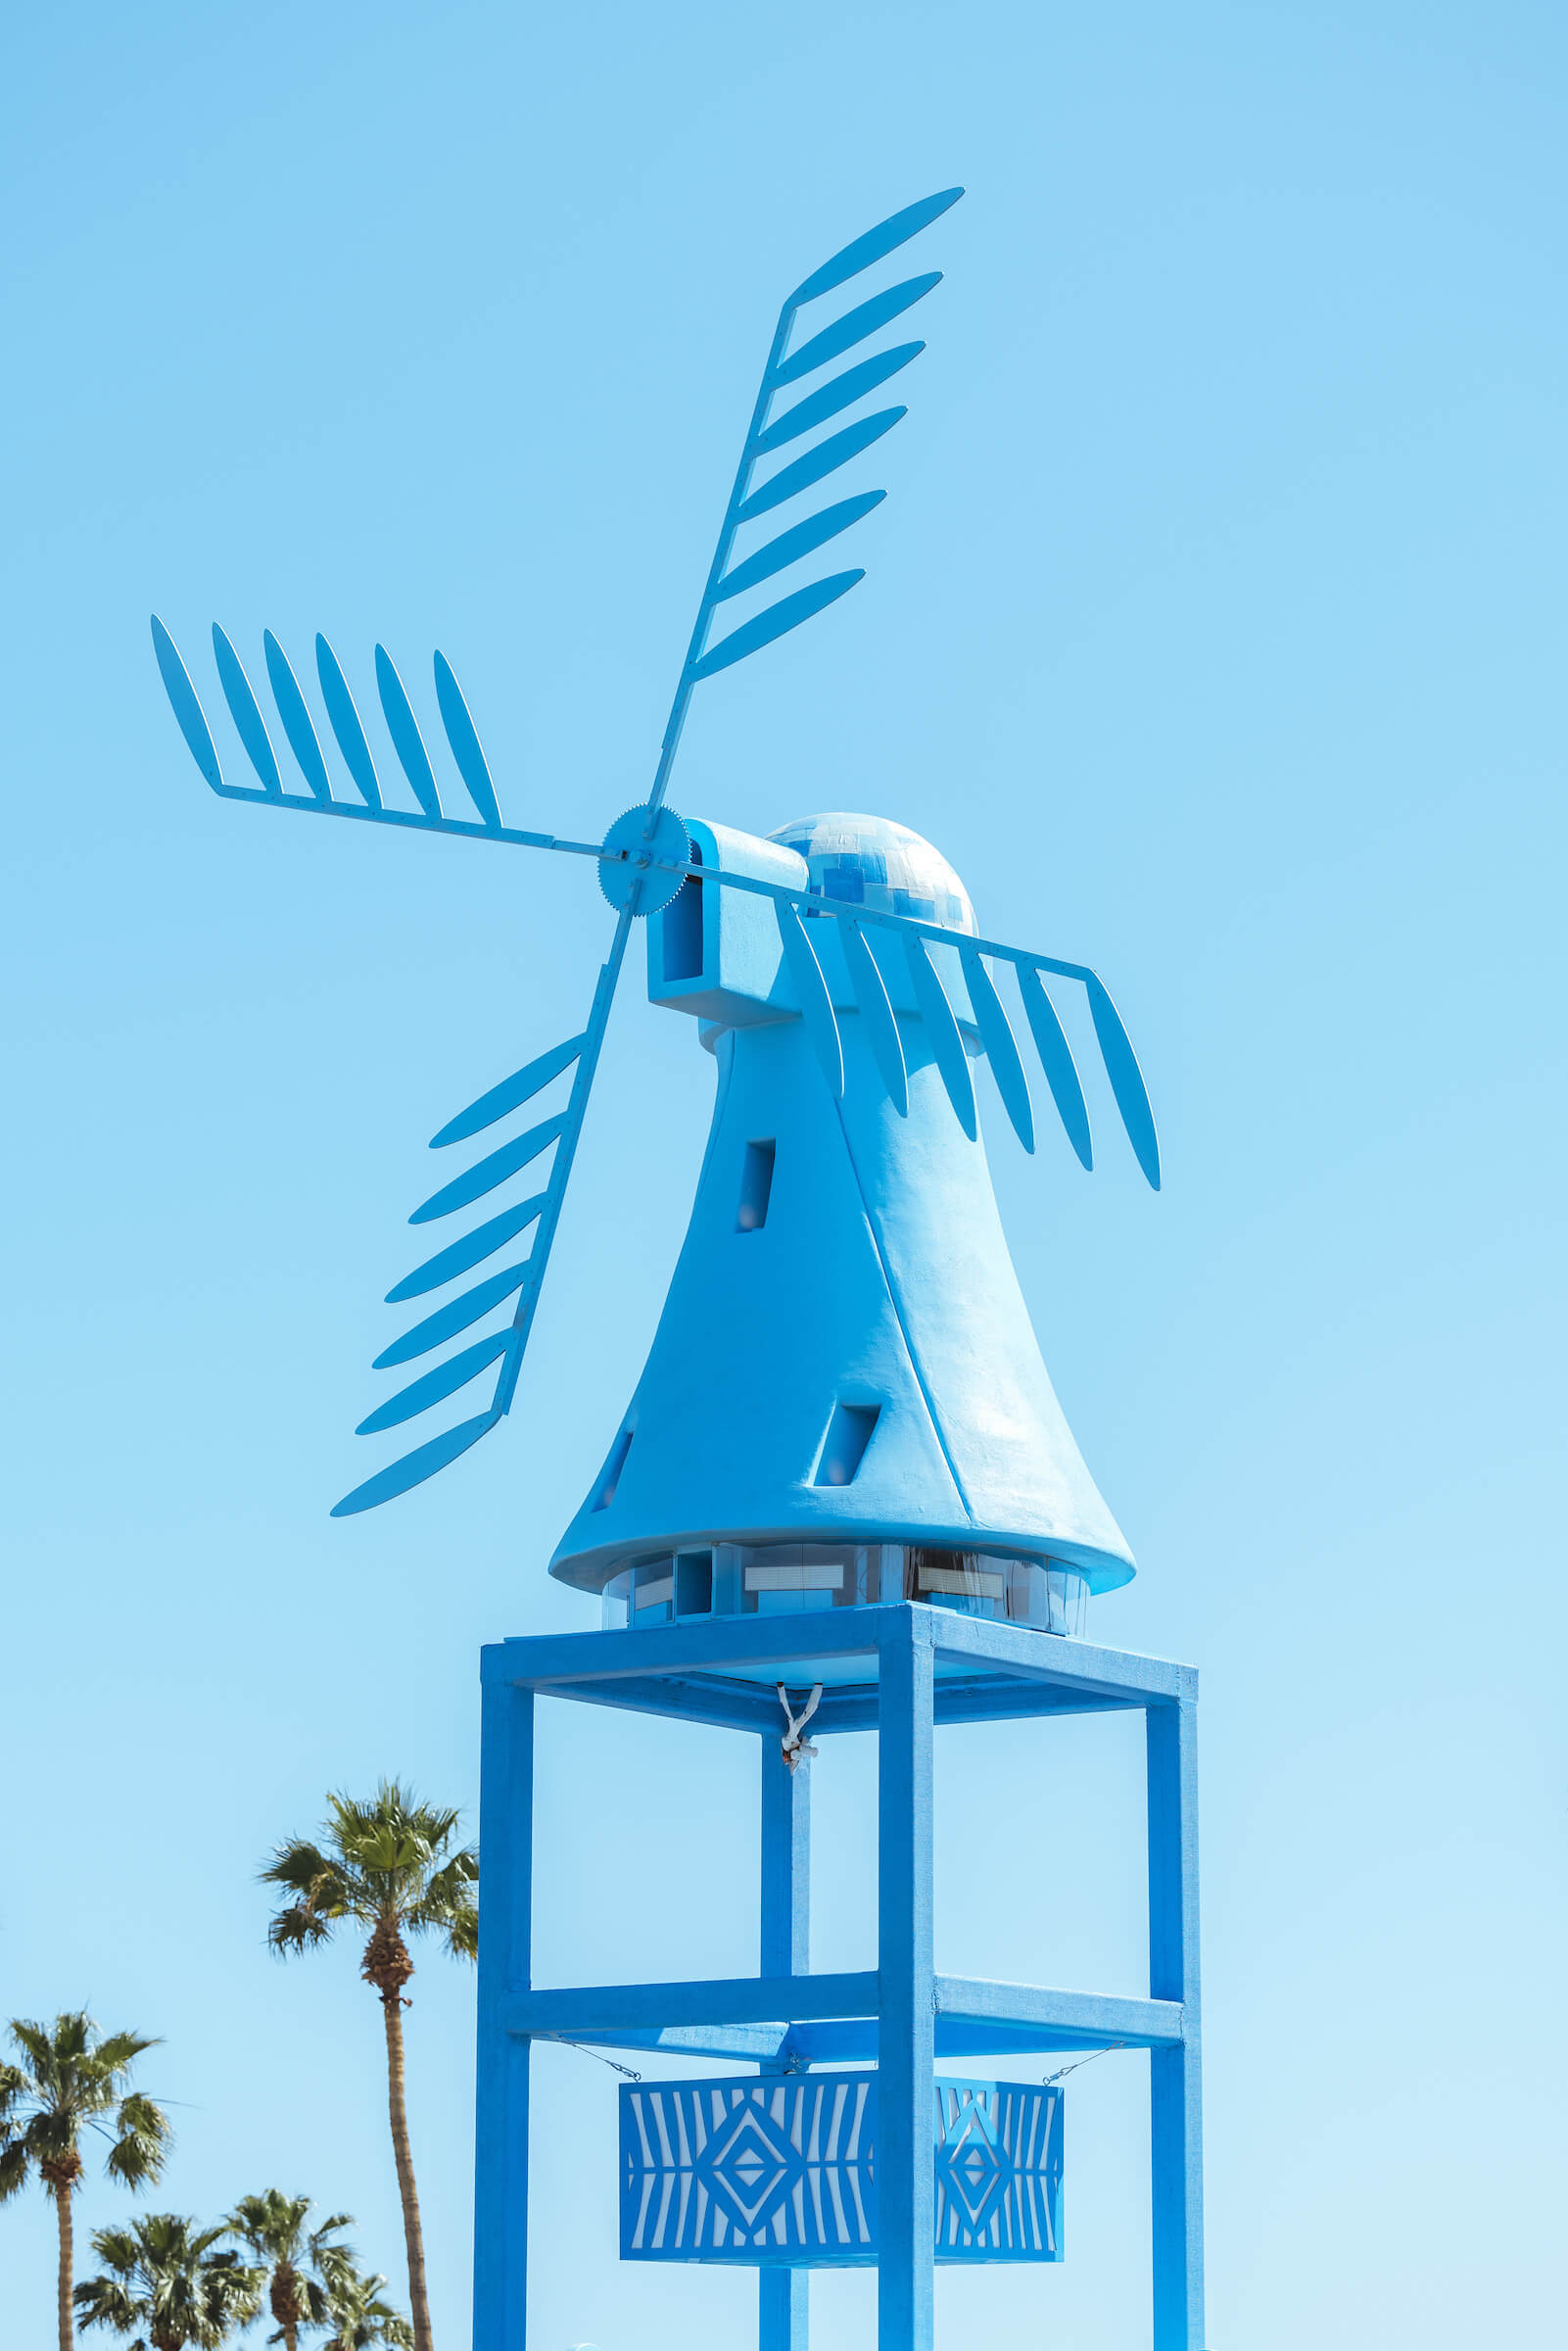 a large blue art installation resembling a traditional dutch windmill